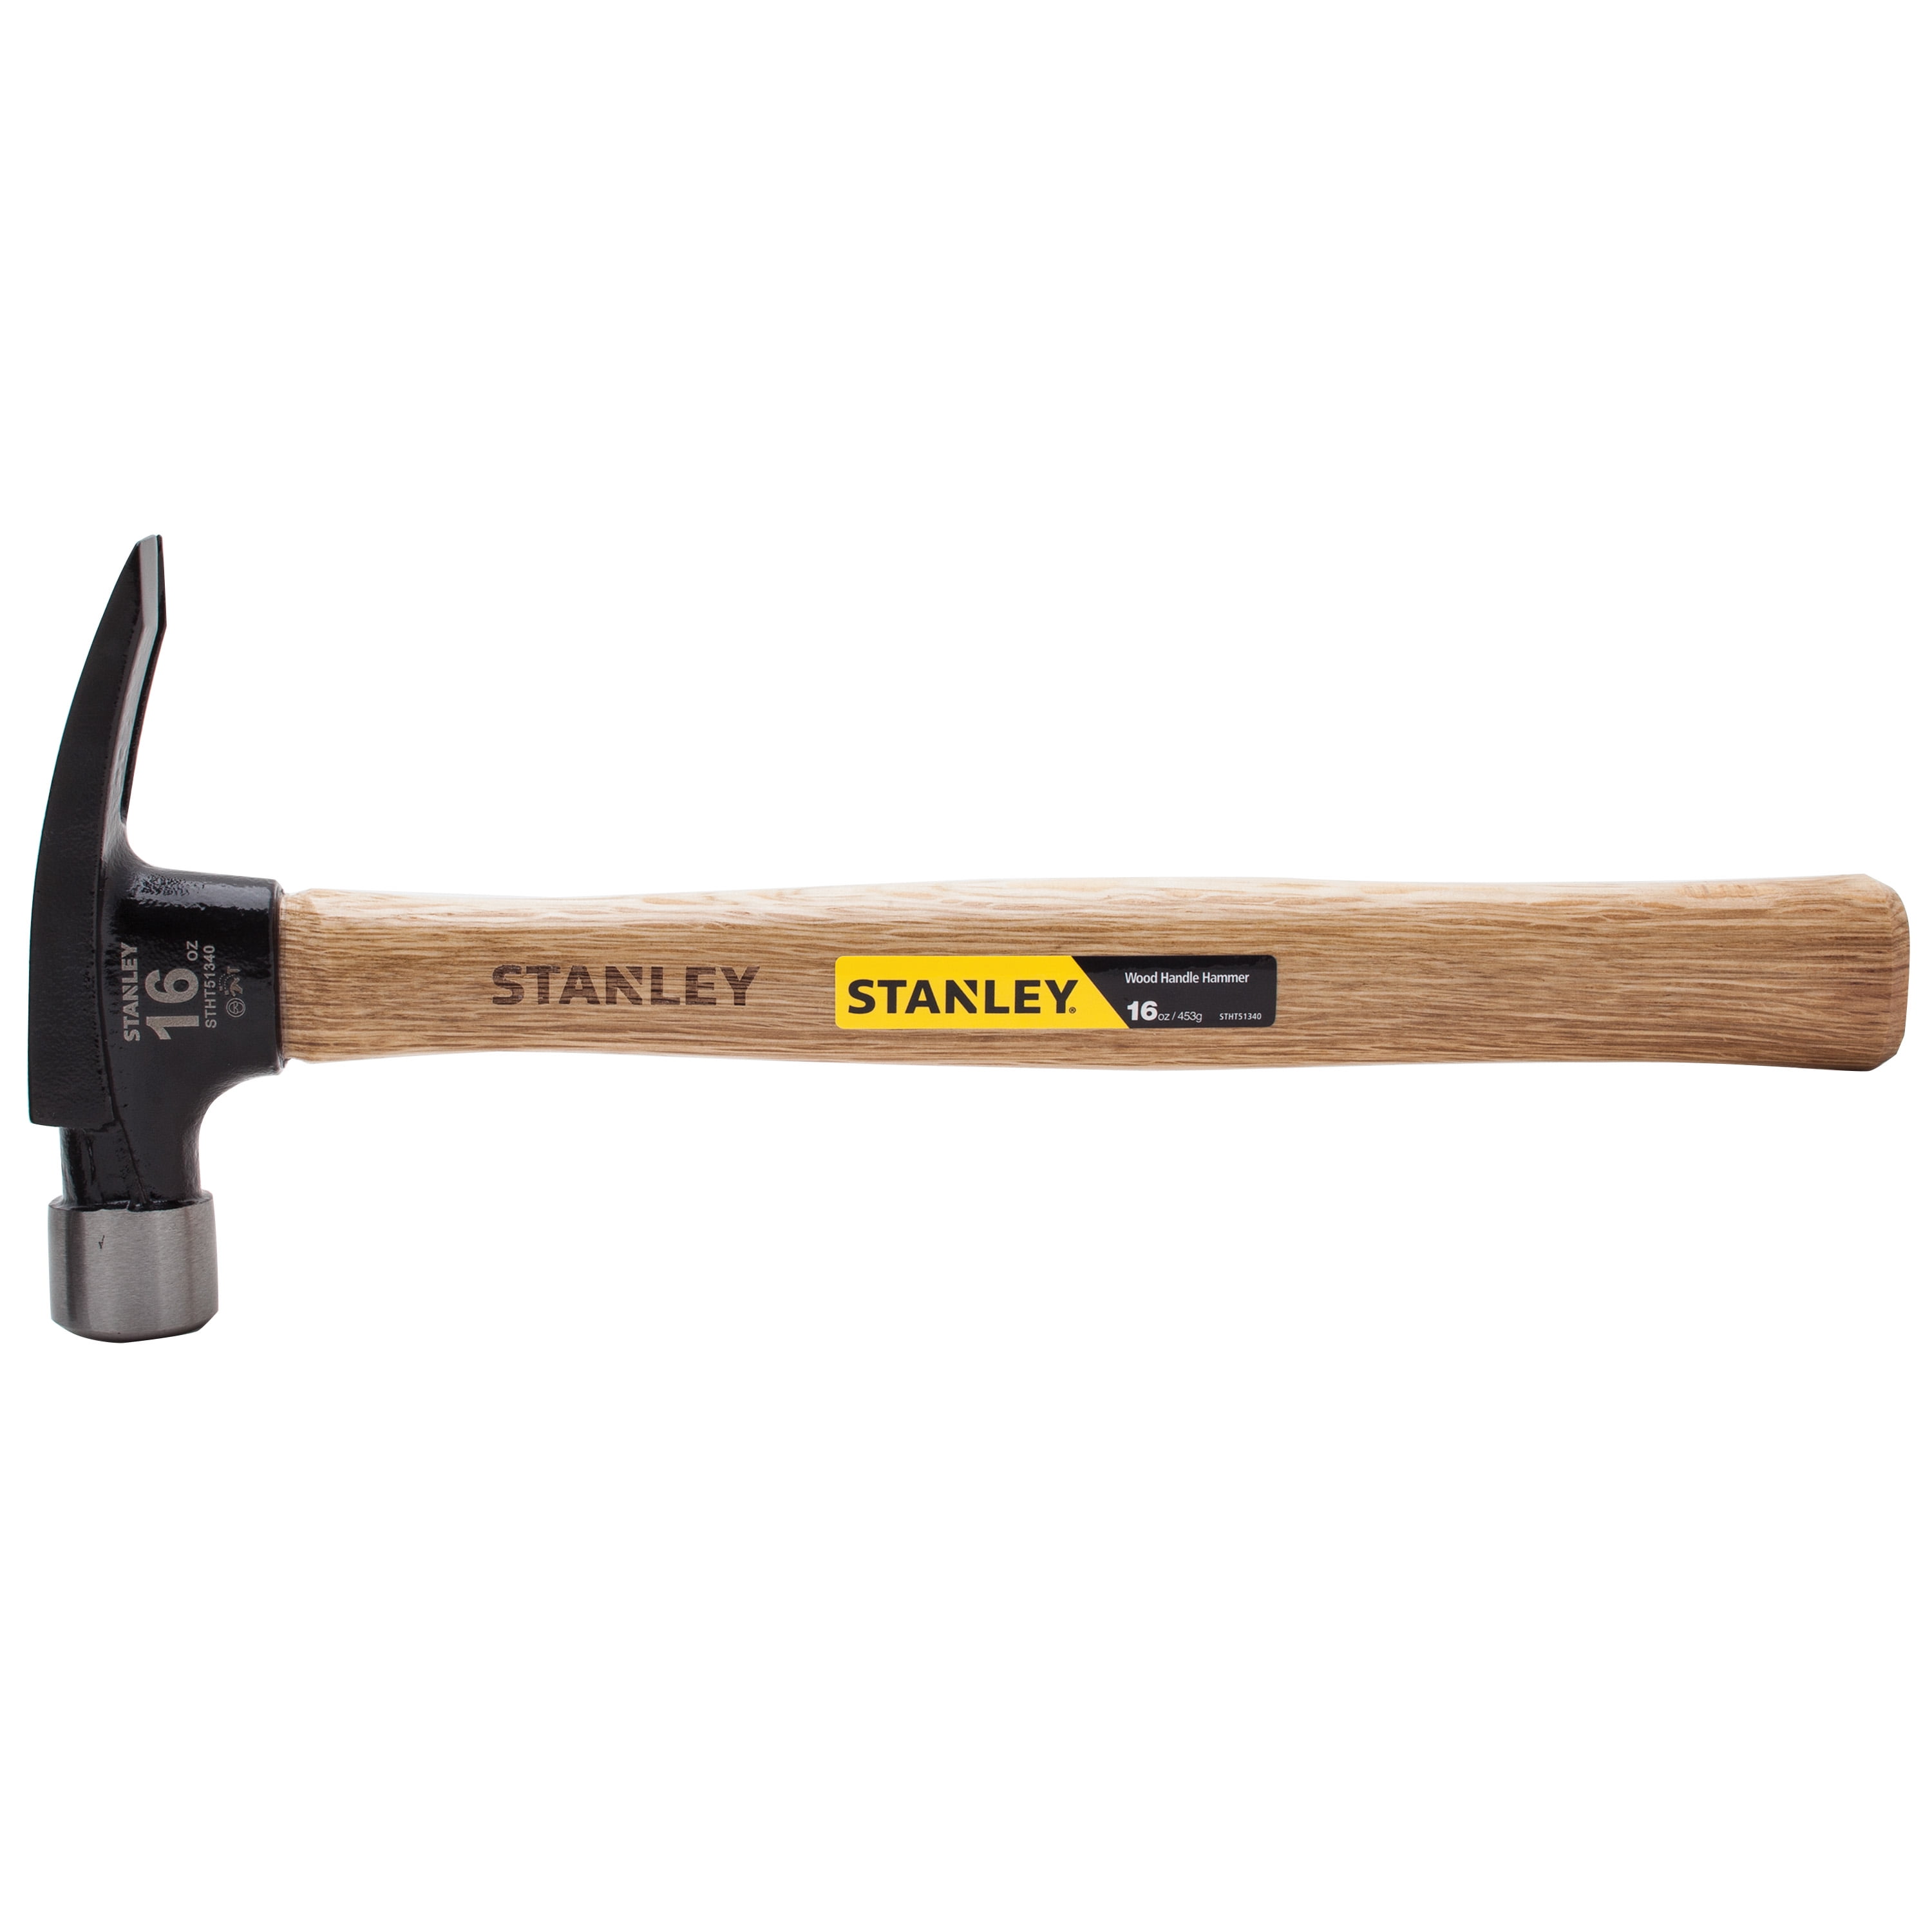 STANLEY 16 oz. Fiberglass Hammer - JMP Wood